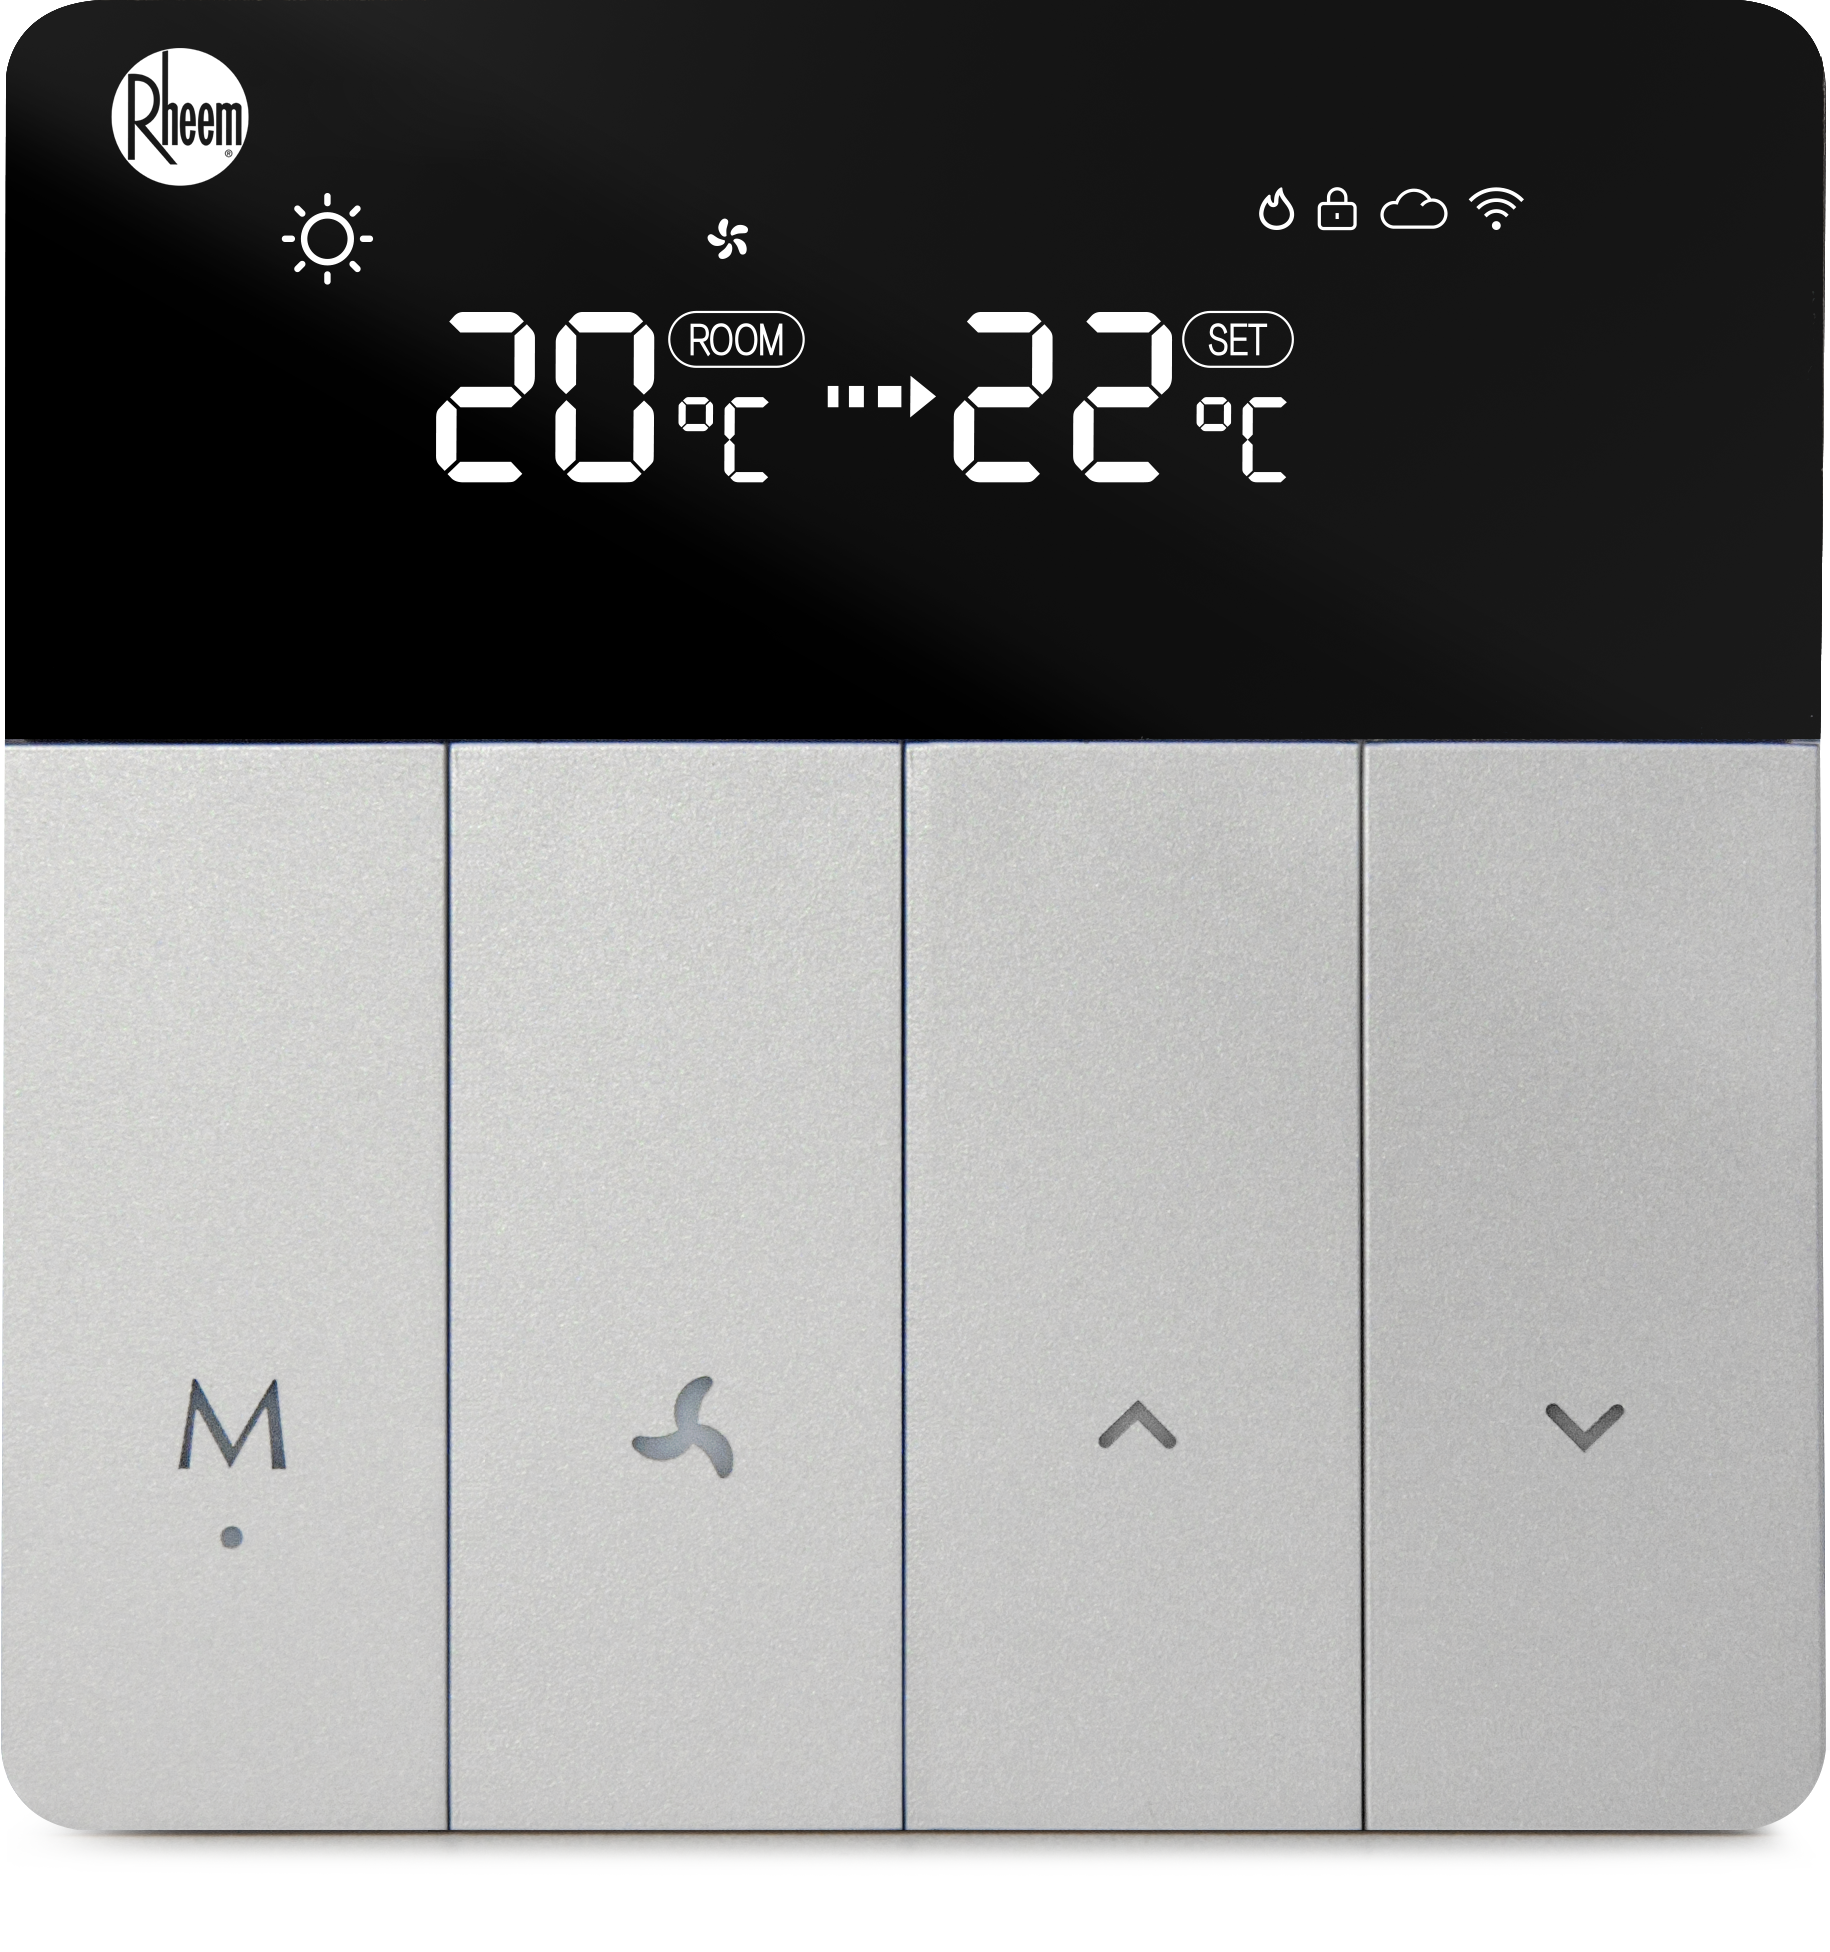 Rheem SmartConnect Thermostat